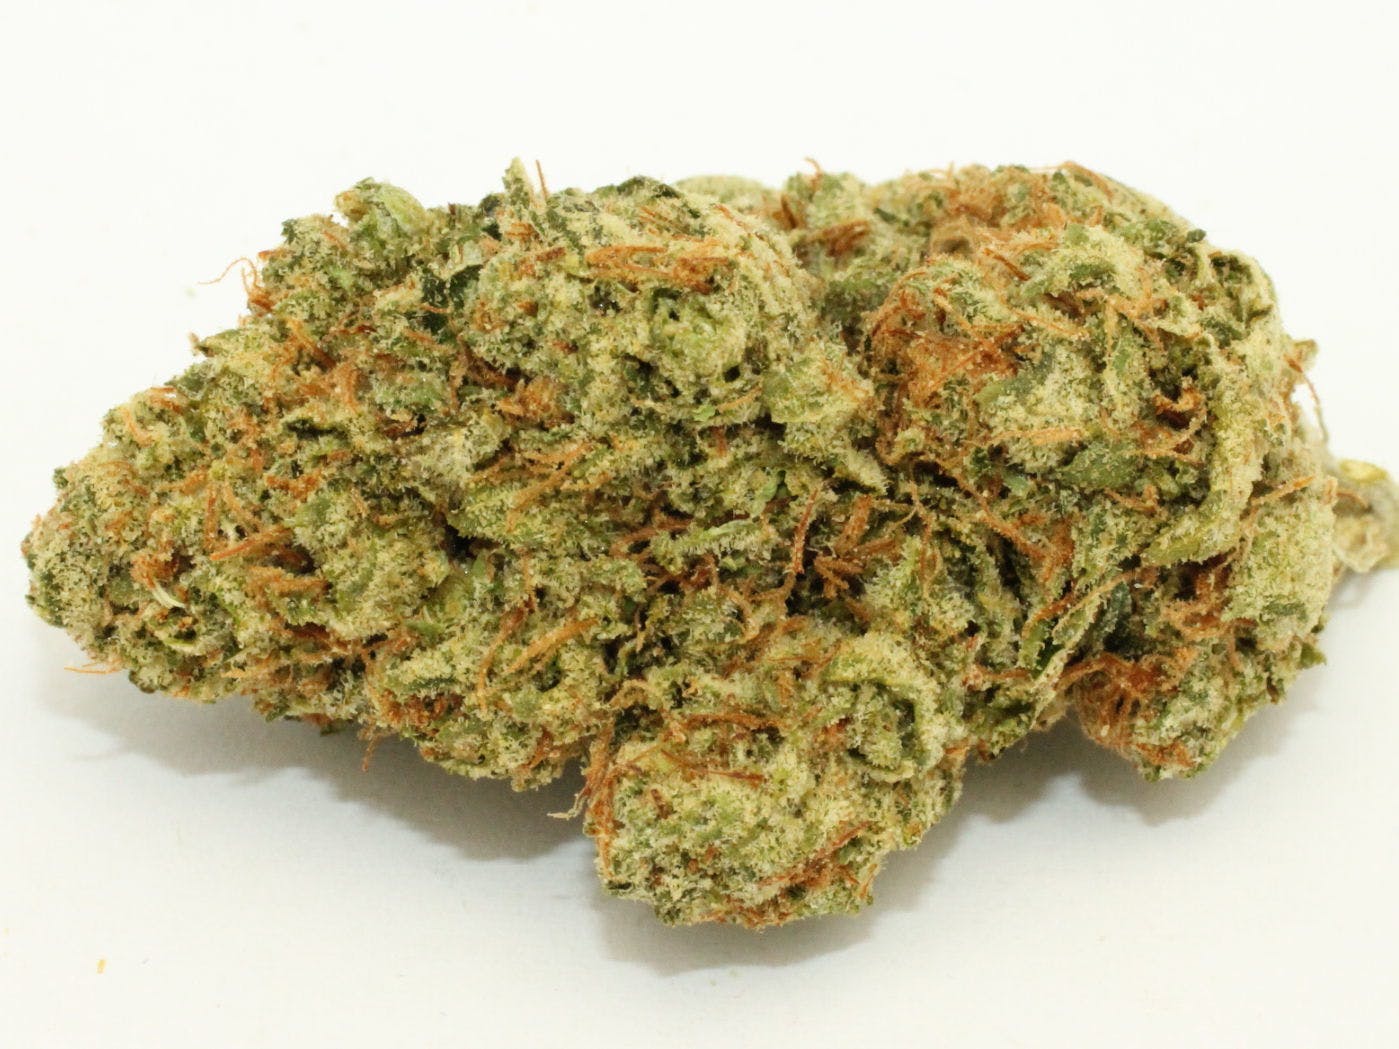 marijuana-dispensaries-lights-out-20-cap-in-gardena-topshelf-kosher-kush-2oz270-qp530